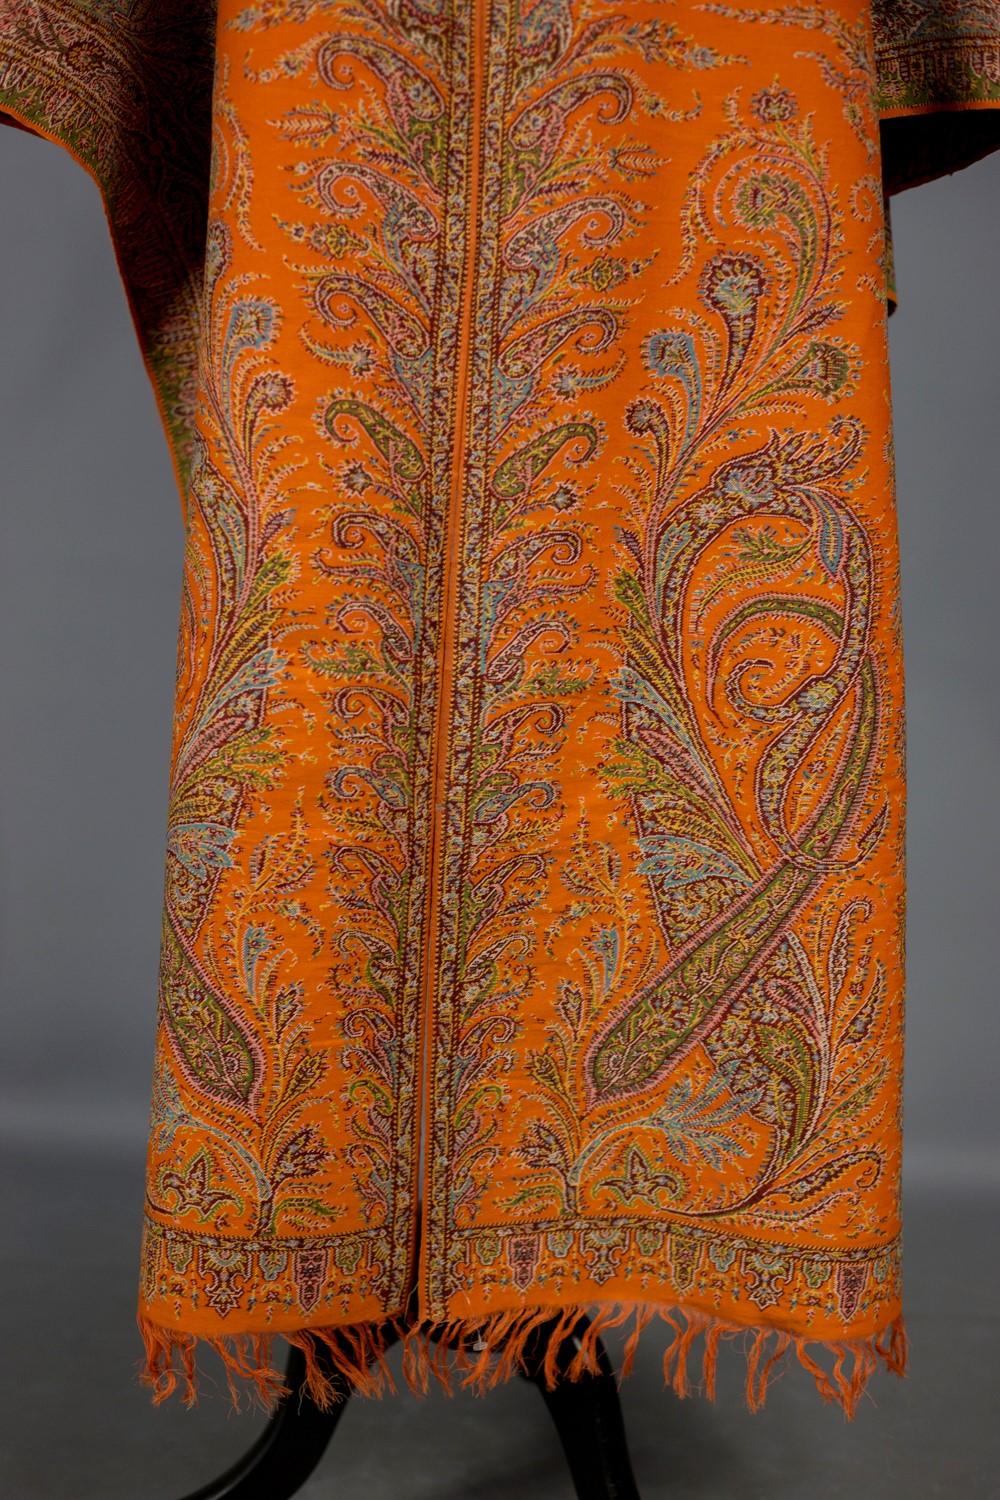 Orange Cashmere Woollen Paisley Stole Shawl - France Circa 1850 For Sale 1